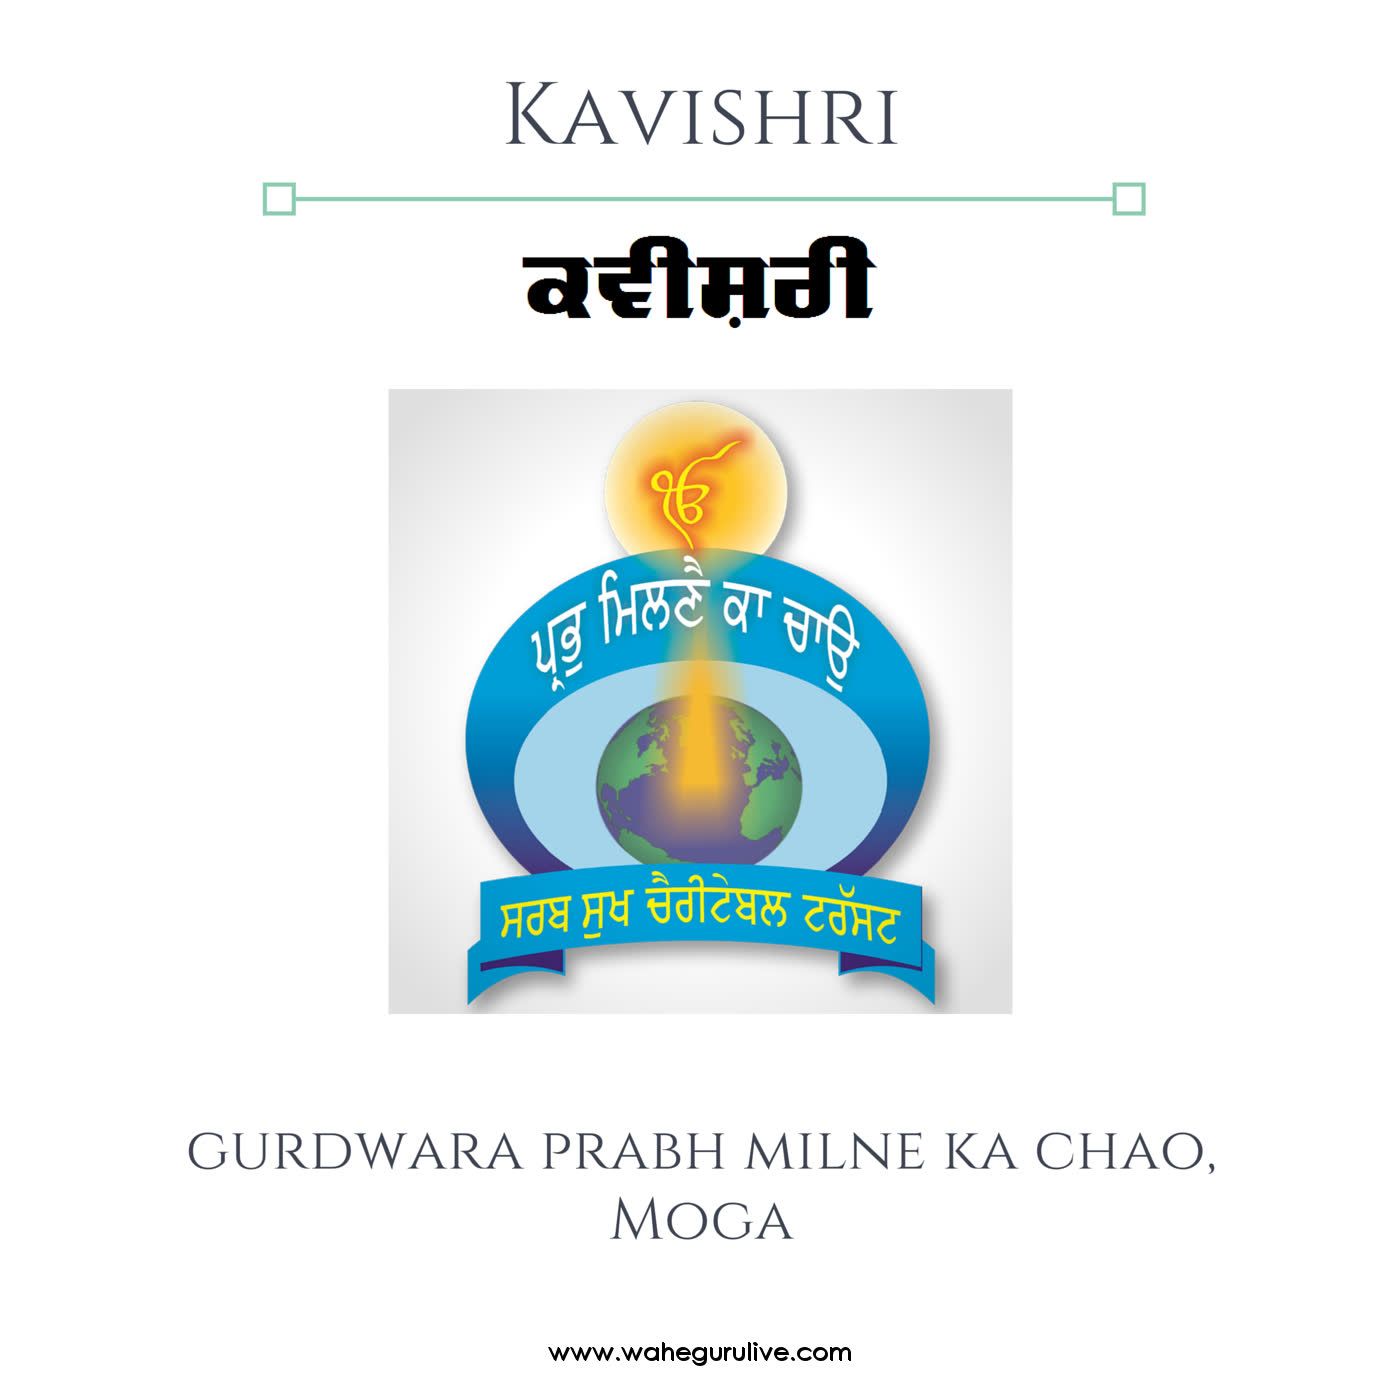 Kavishri